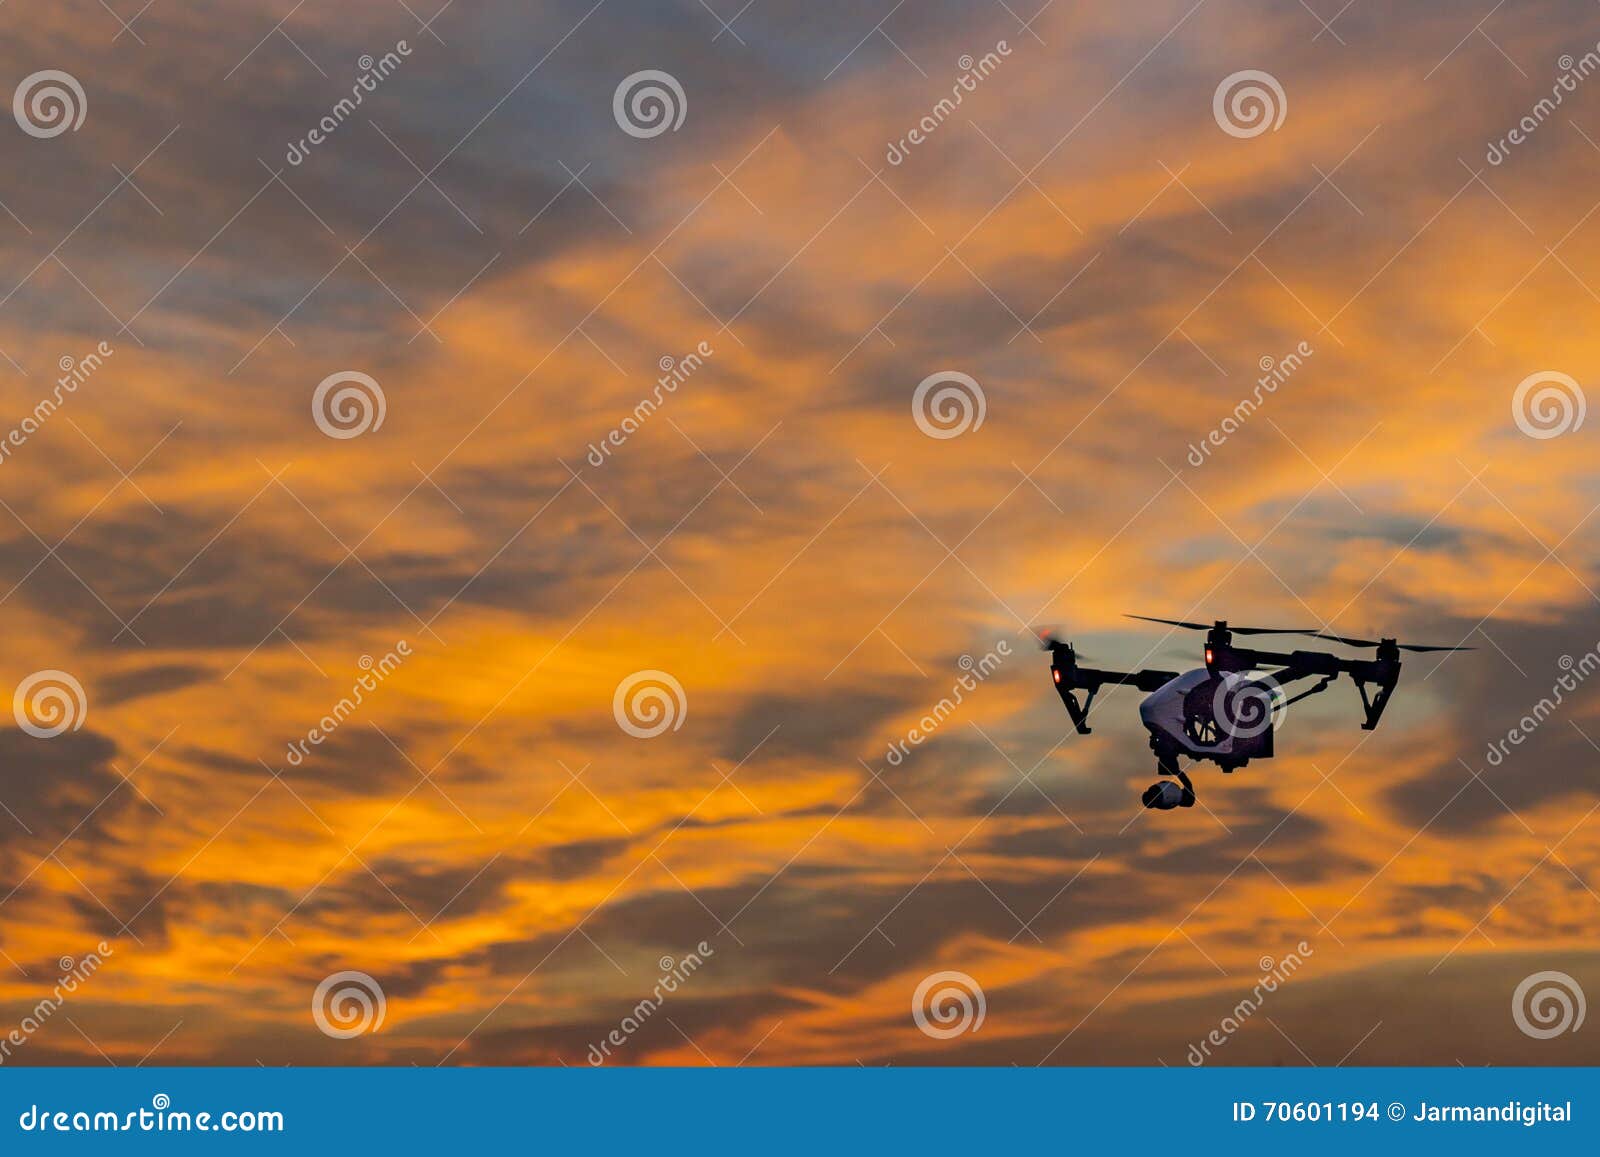 camera drone uav sunset